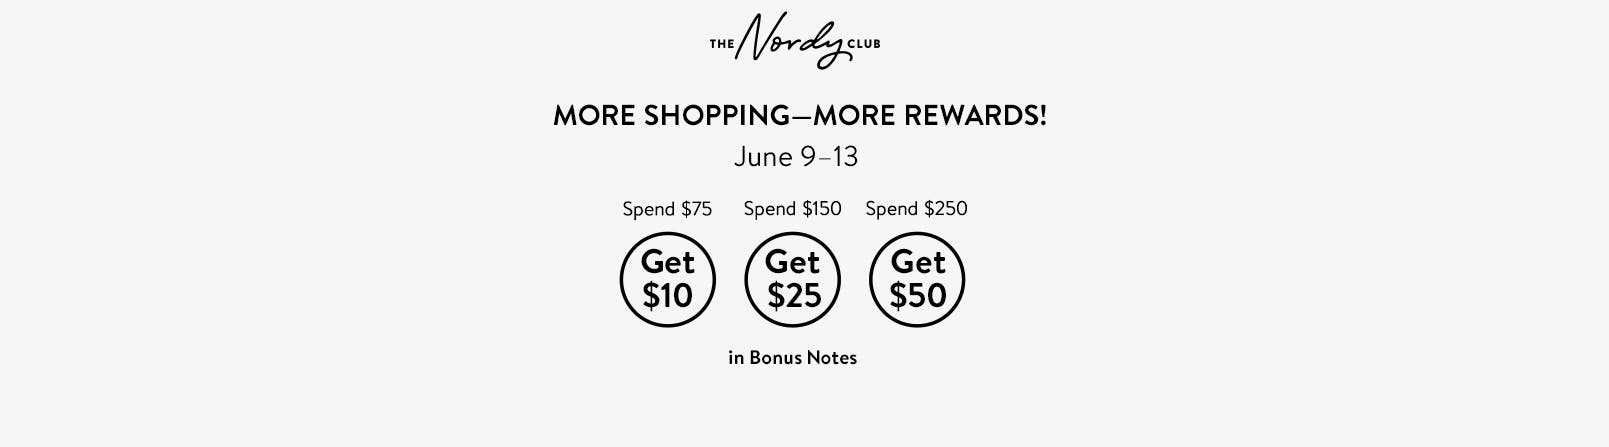 Nordy Club Extra Rewards Nordstrom Rack